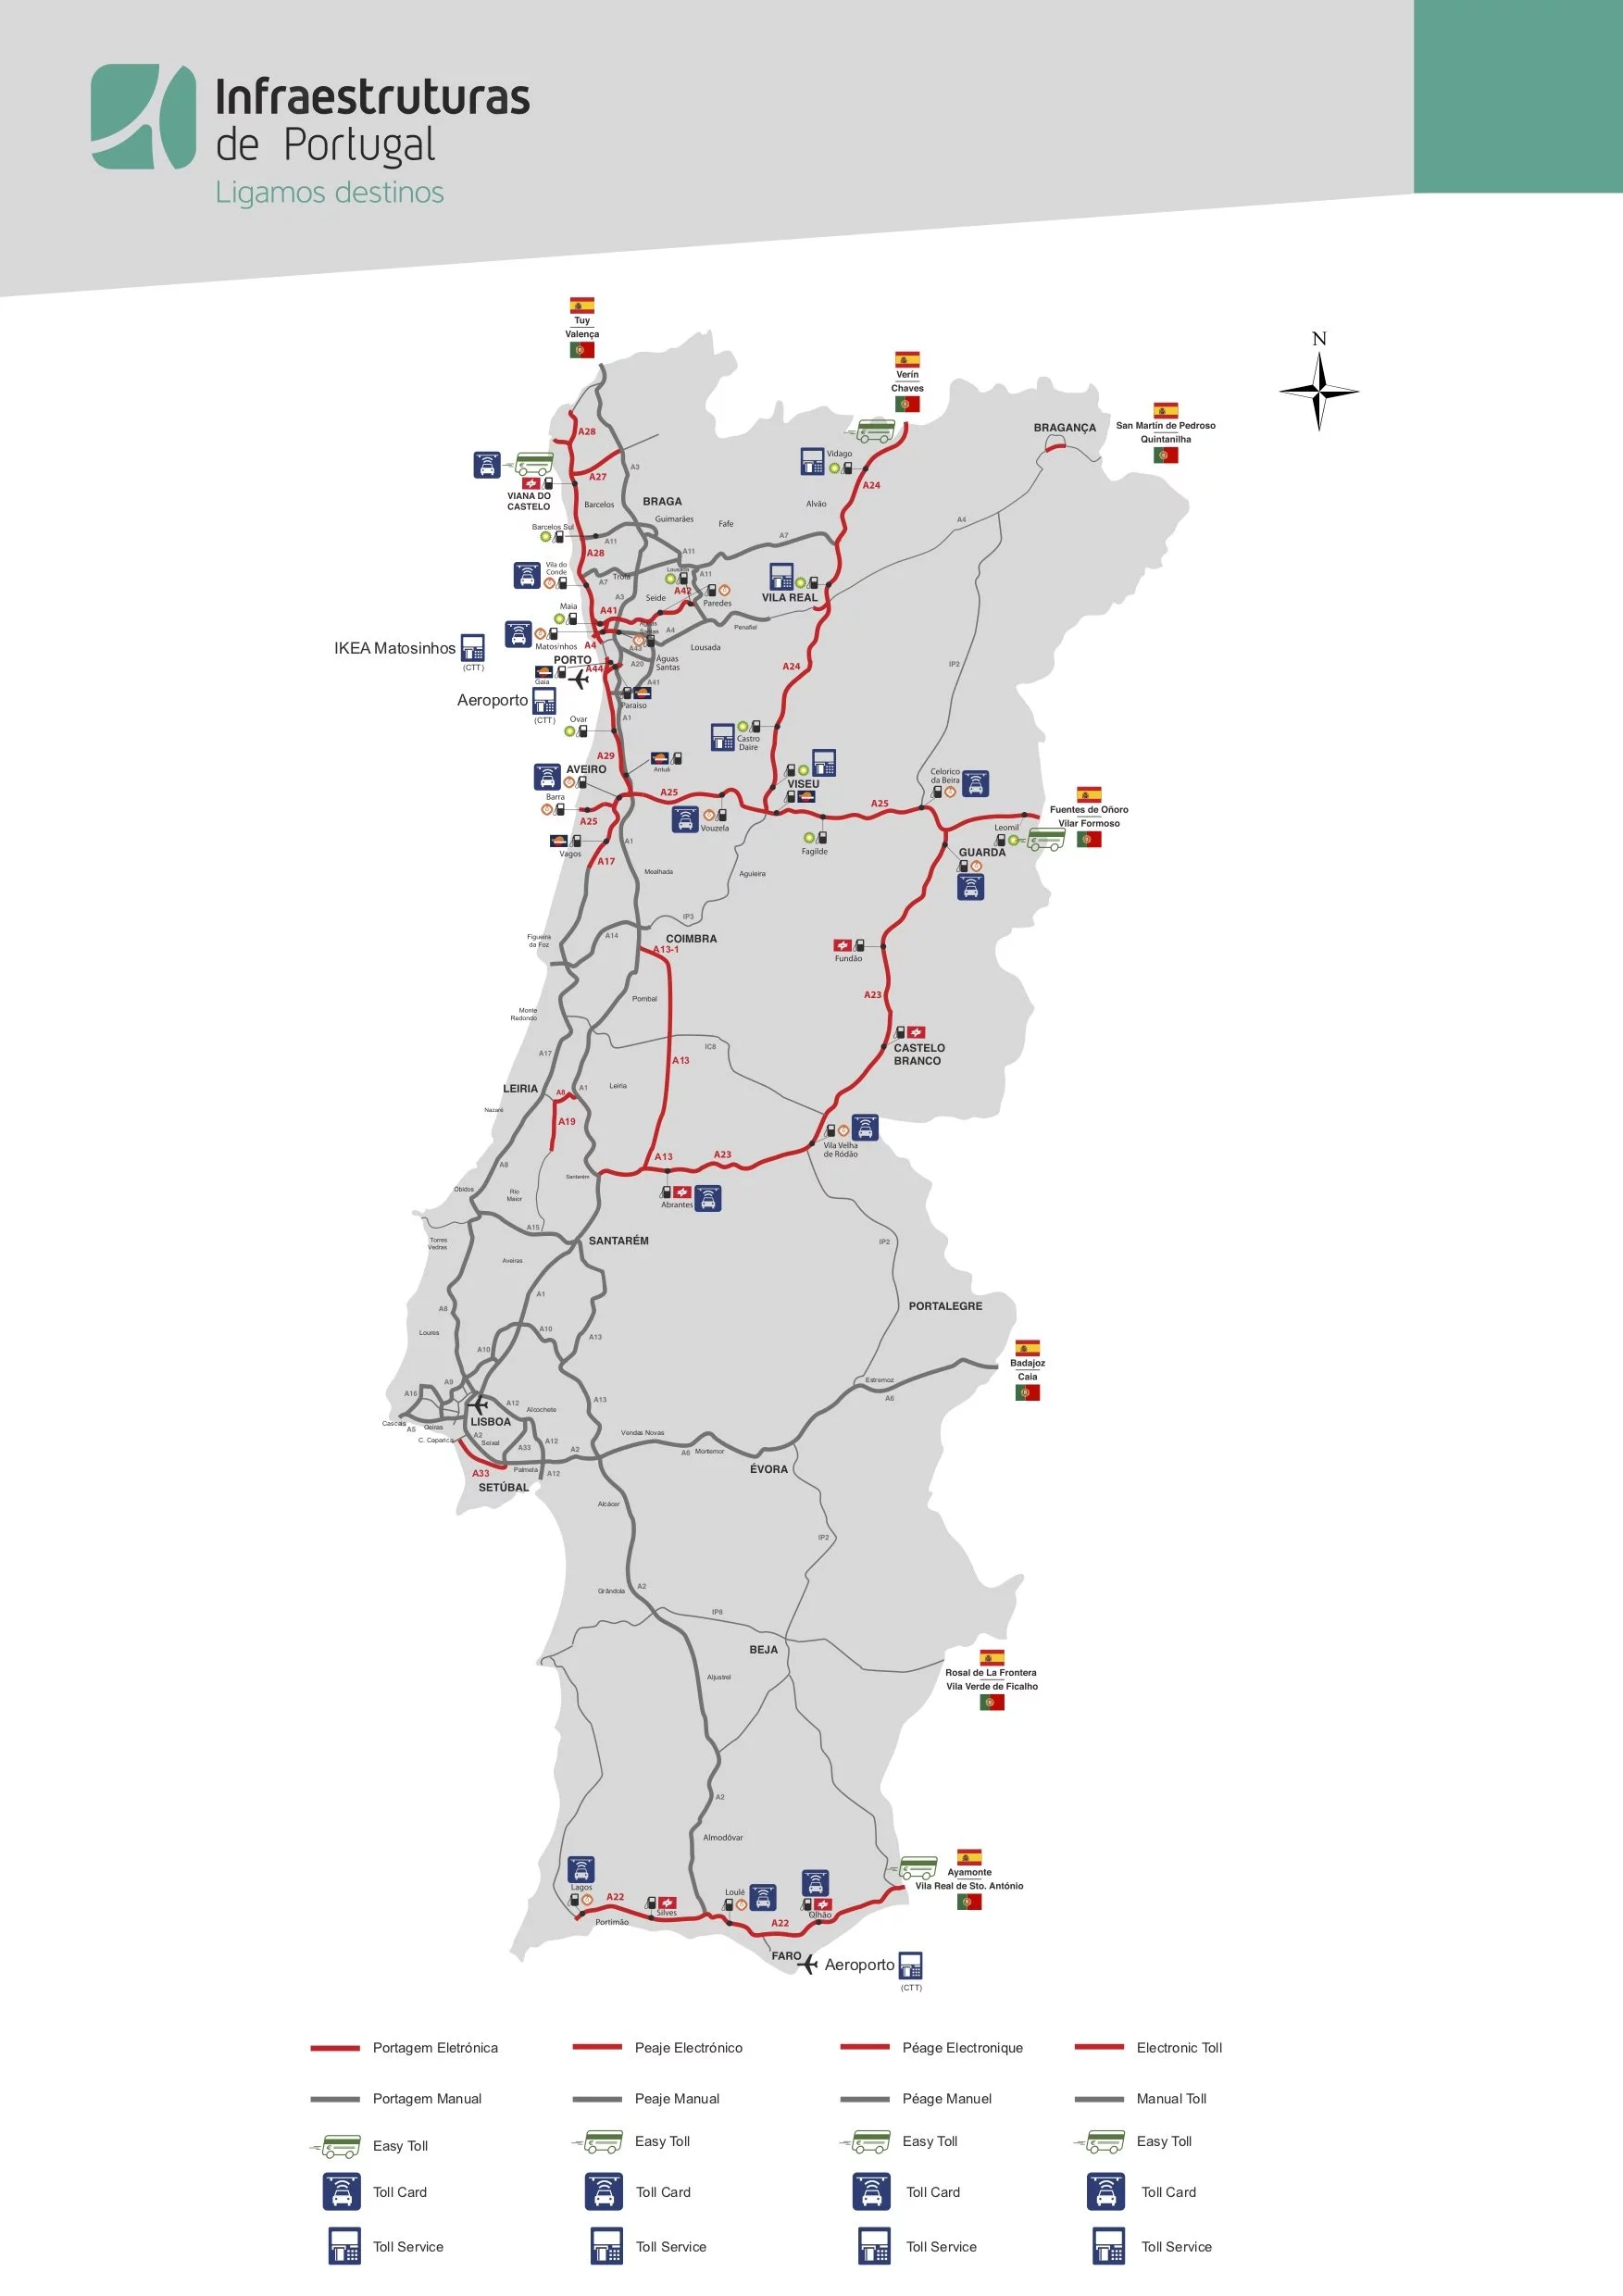 Portugal toll roads map. Source: Infraectucturas de Portugal - Road trip Portugal